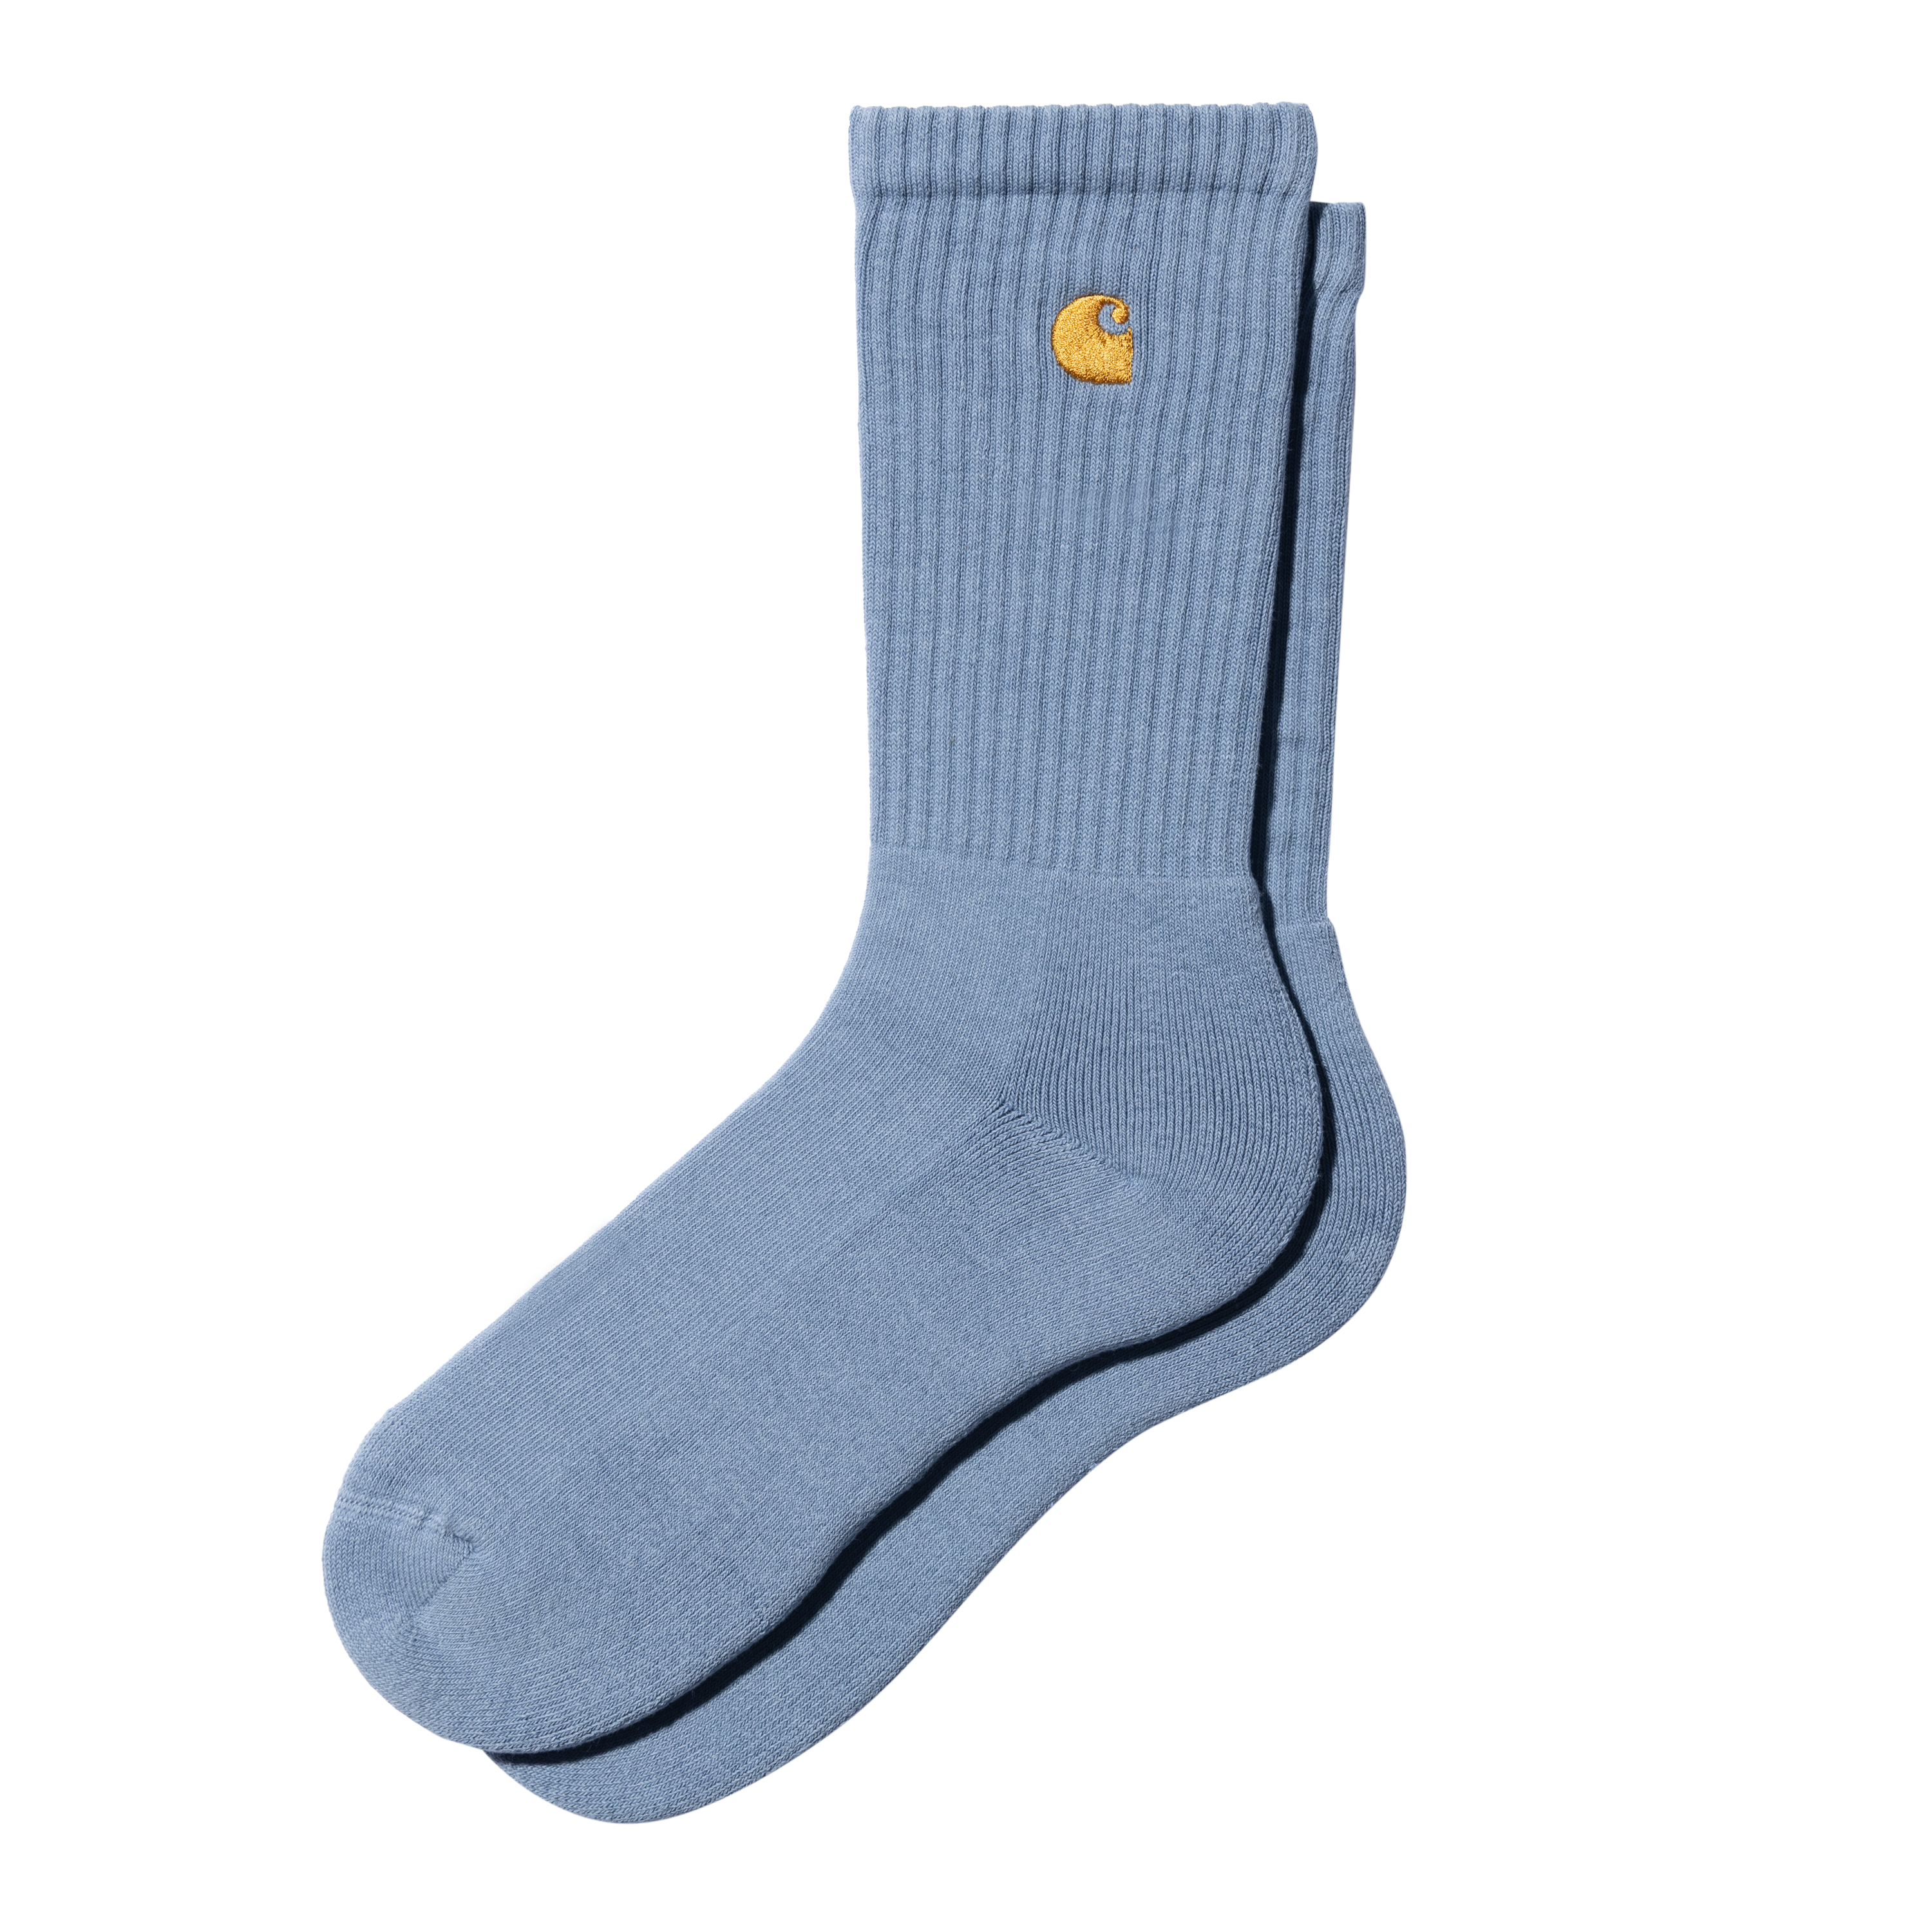 Carhartt WIP Chase Socks in Blue